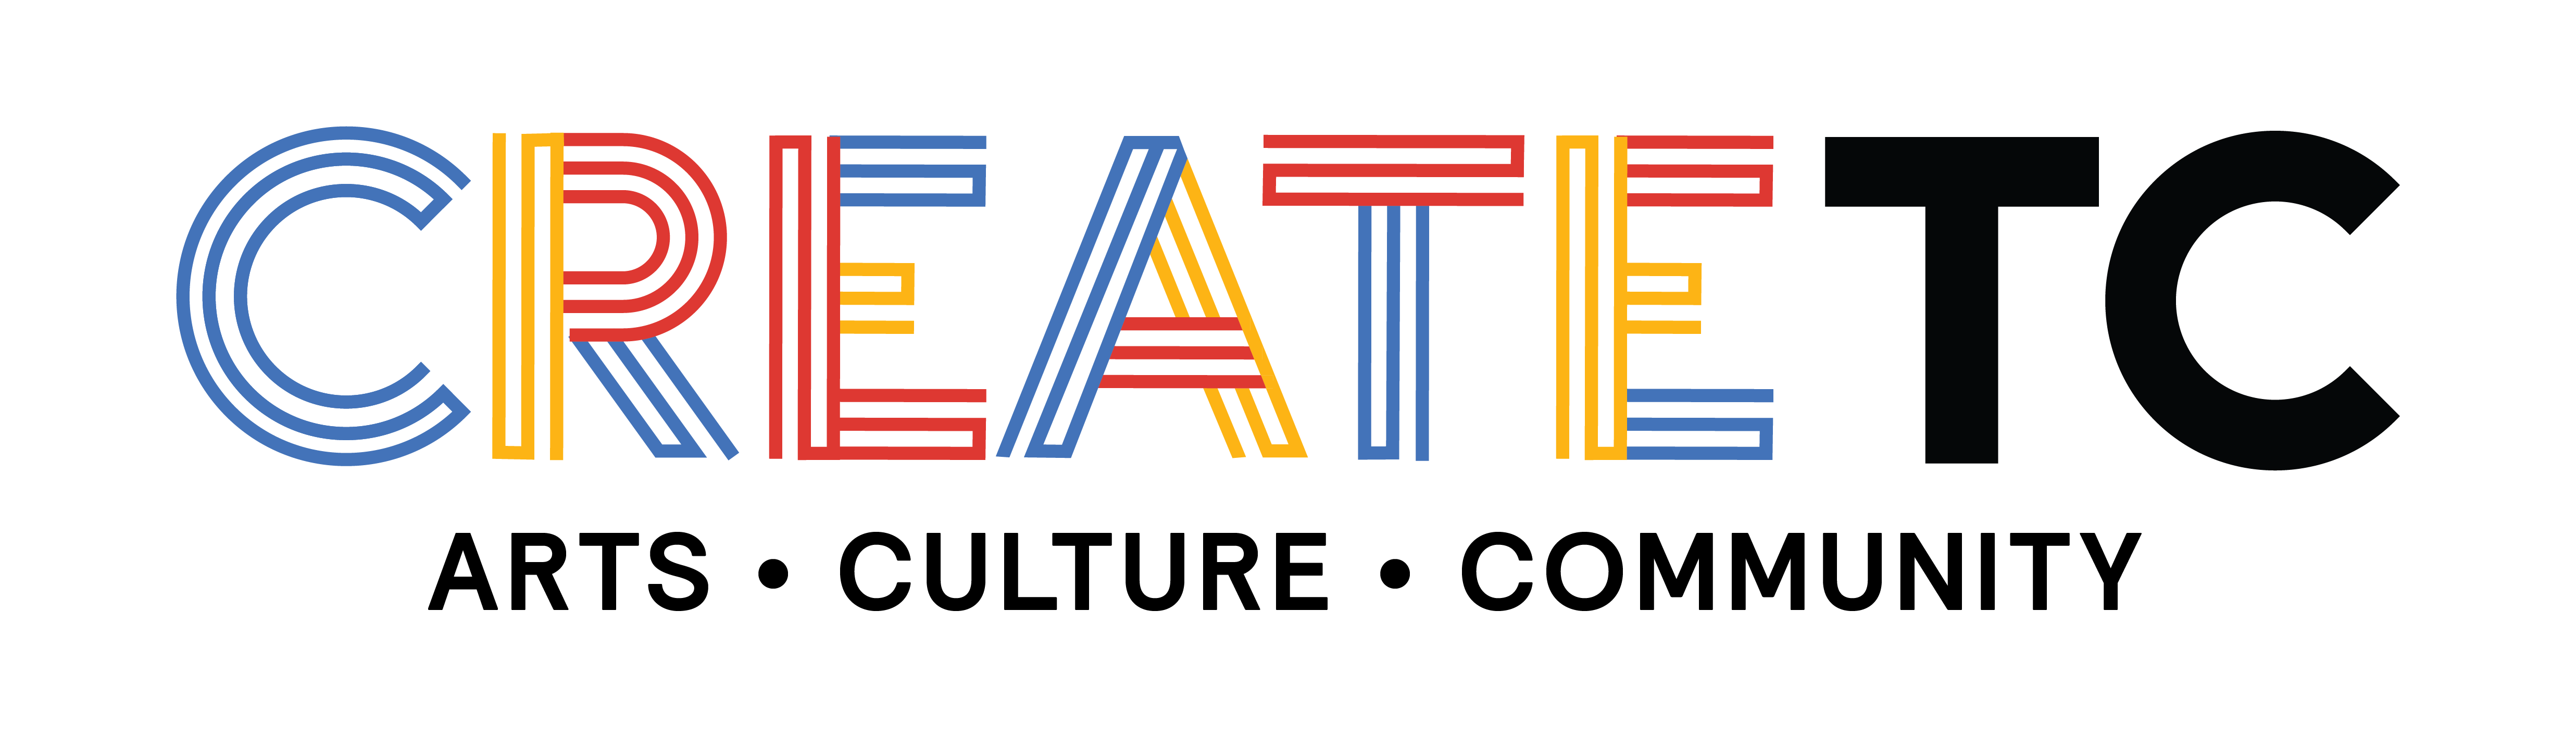 CreateTC Logo - Arts, Culture, Community